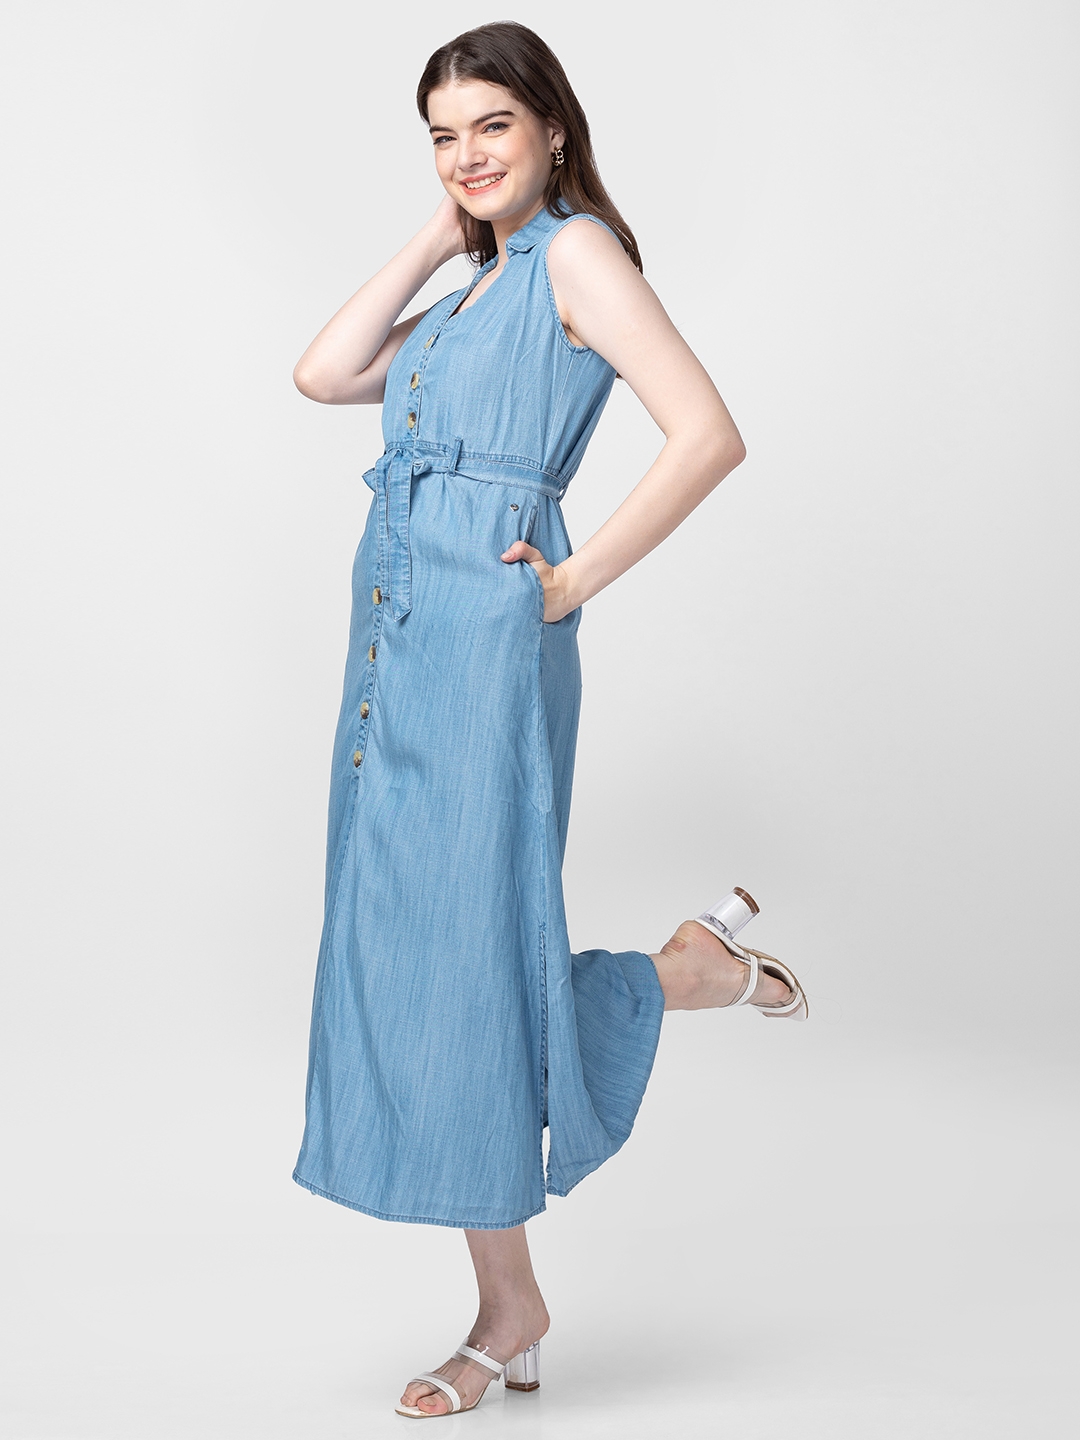 Women's Denim Dresses: Shop for On-Trend Apparel for Your Wardrobe | Kohl's